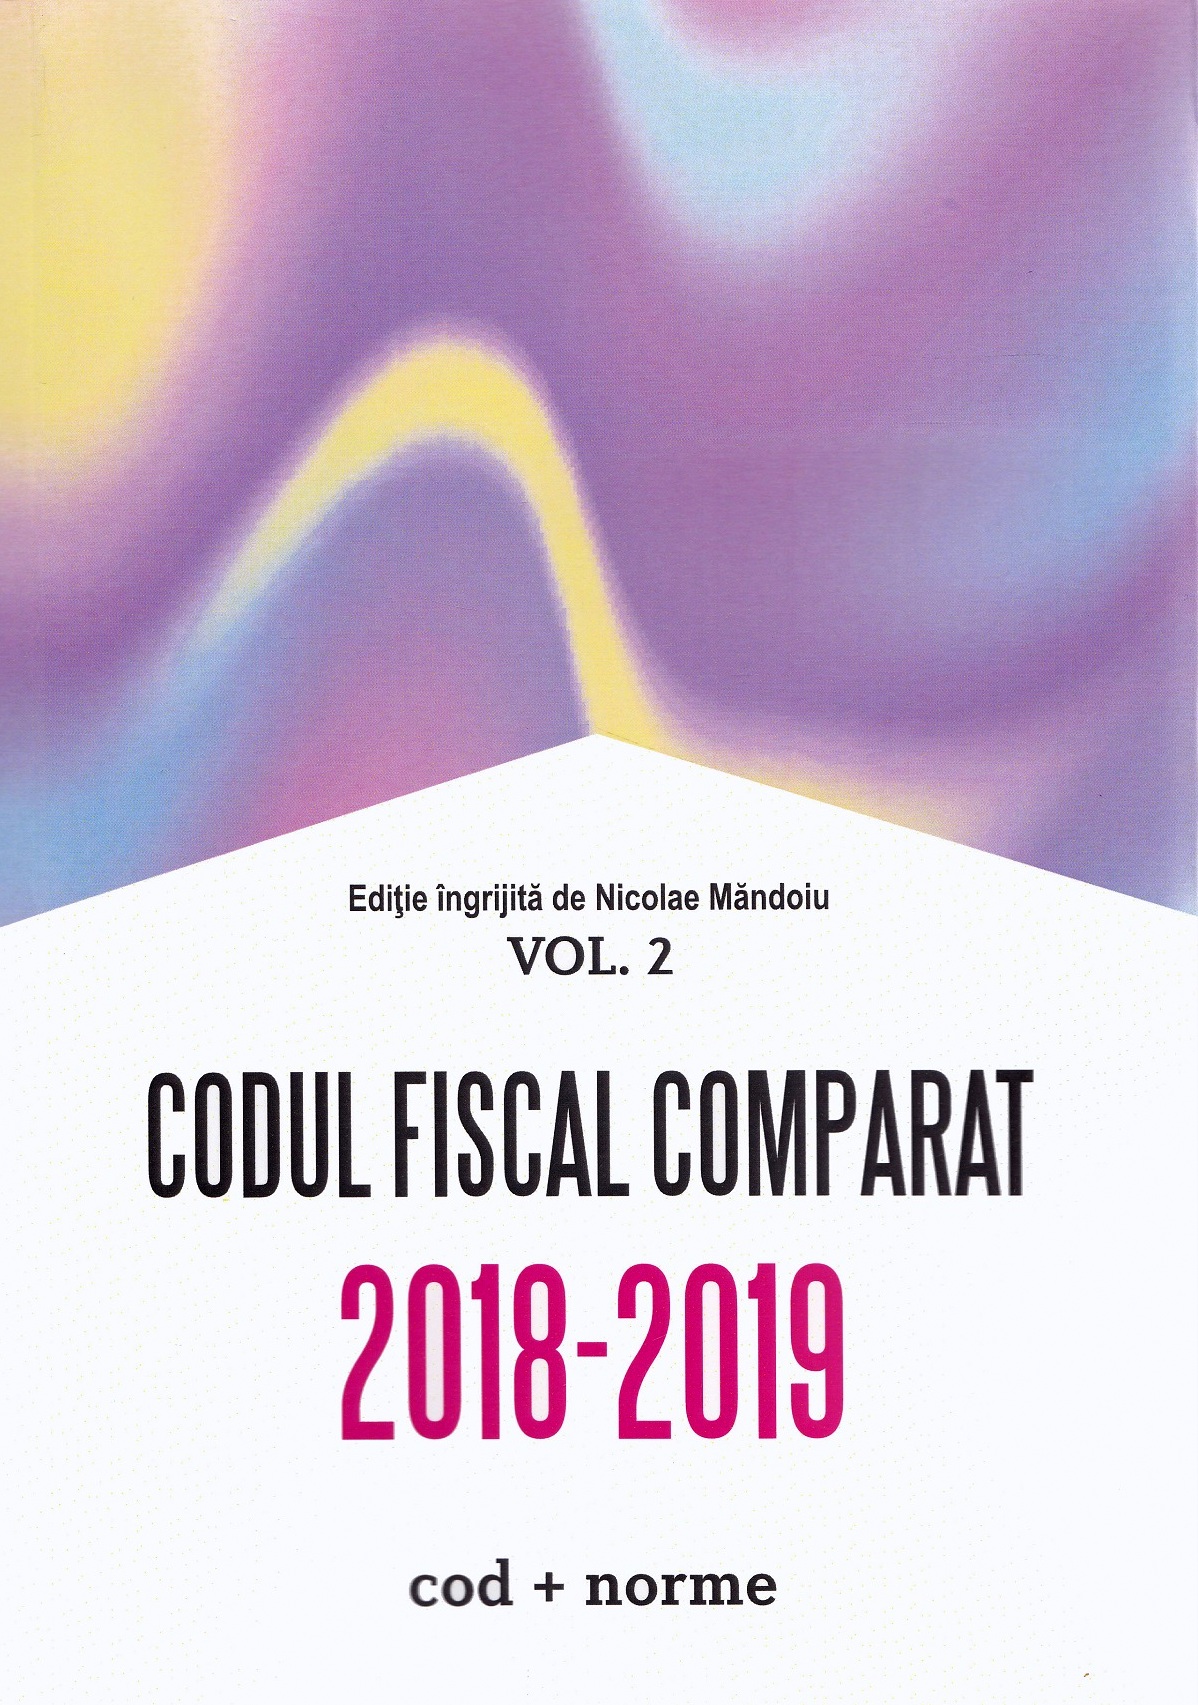 Codul fiscal comparat 2018-2019 vol.1-3